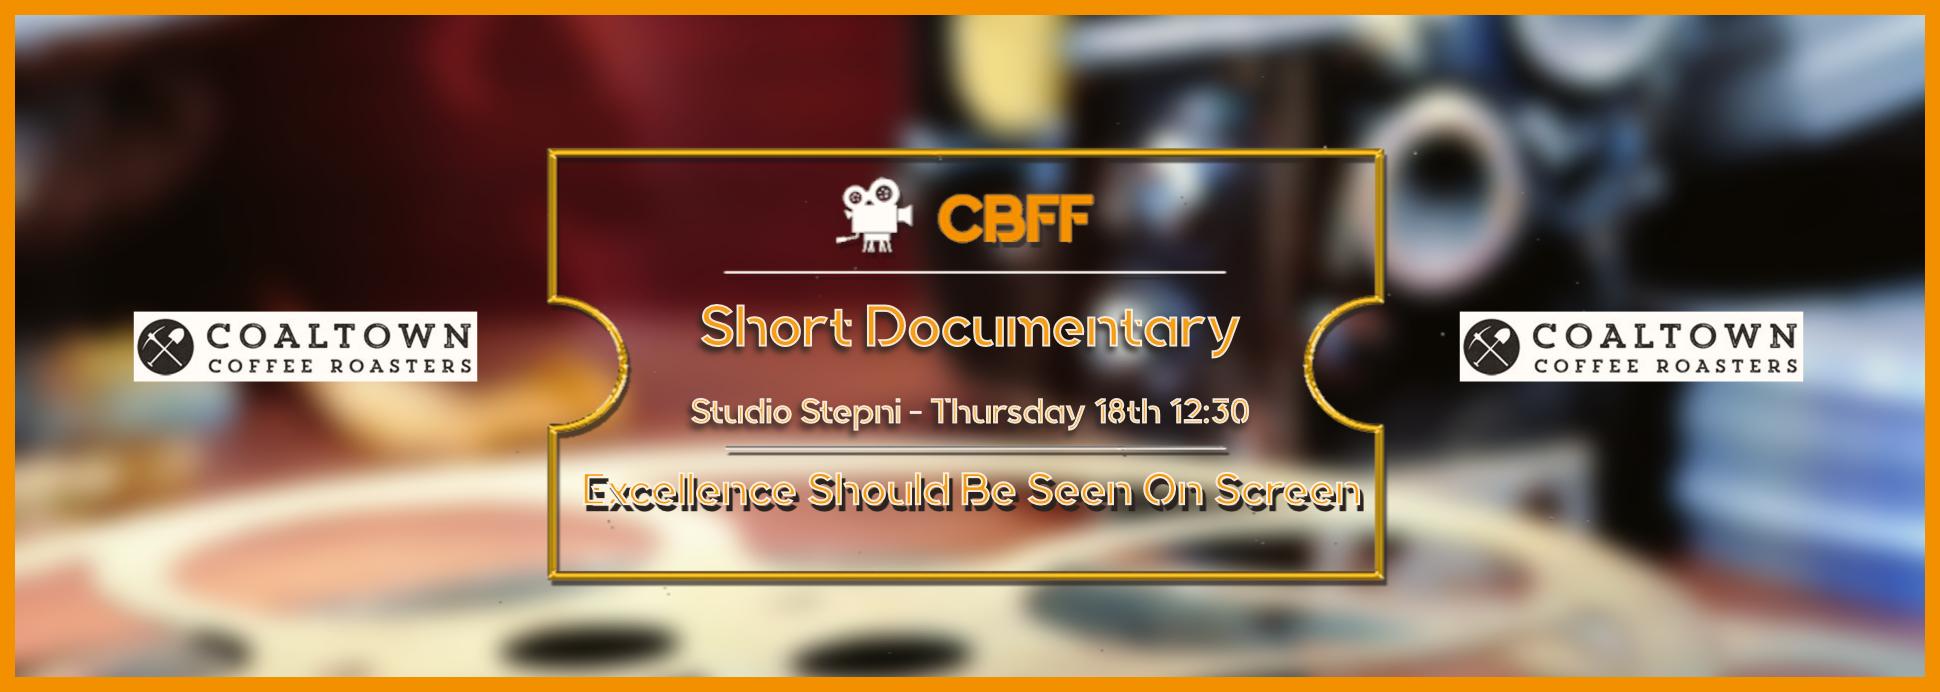 Studio Stepni - Short Documentary 18th 12:30